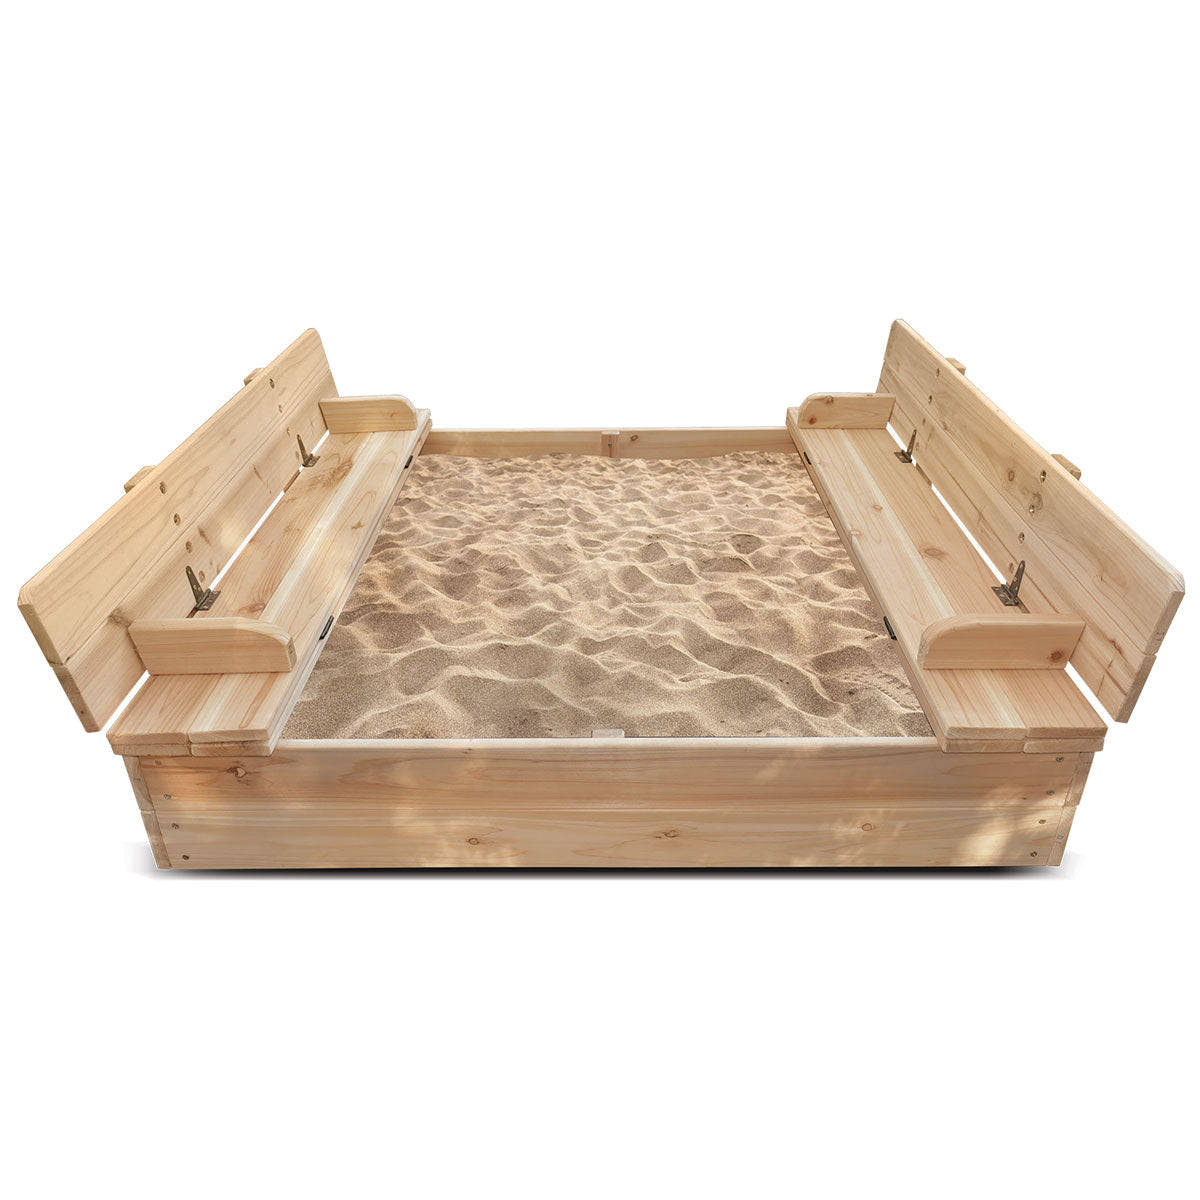 Foldable Timber Sandpit with Seats, Ground Sheet - Lifespan Kids